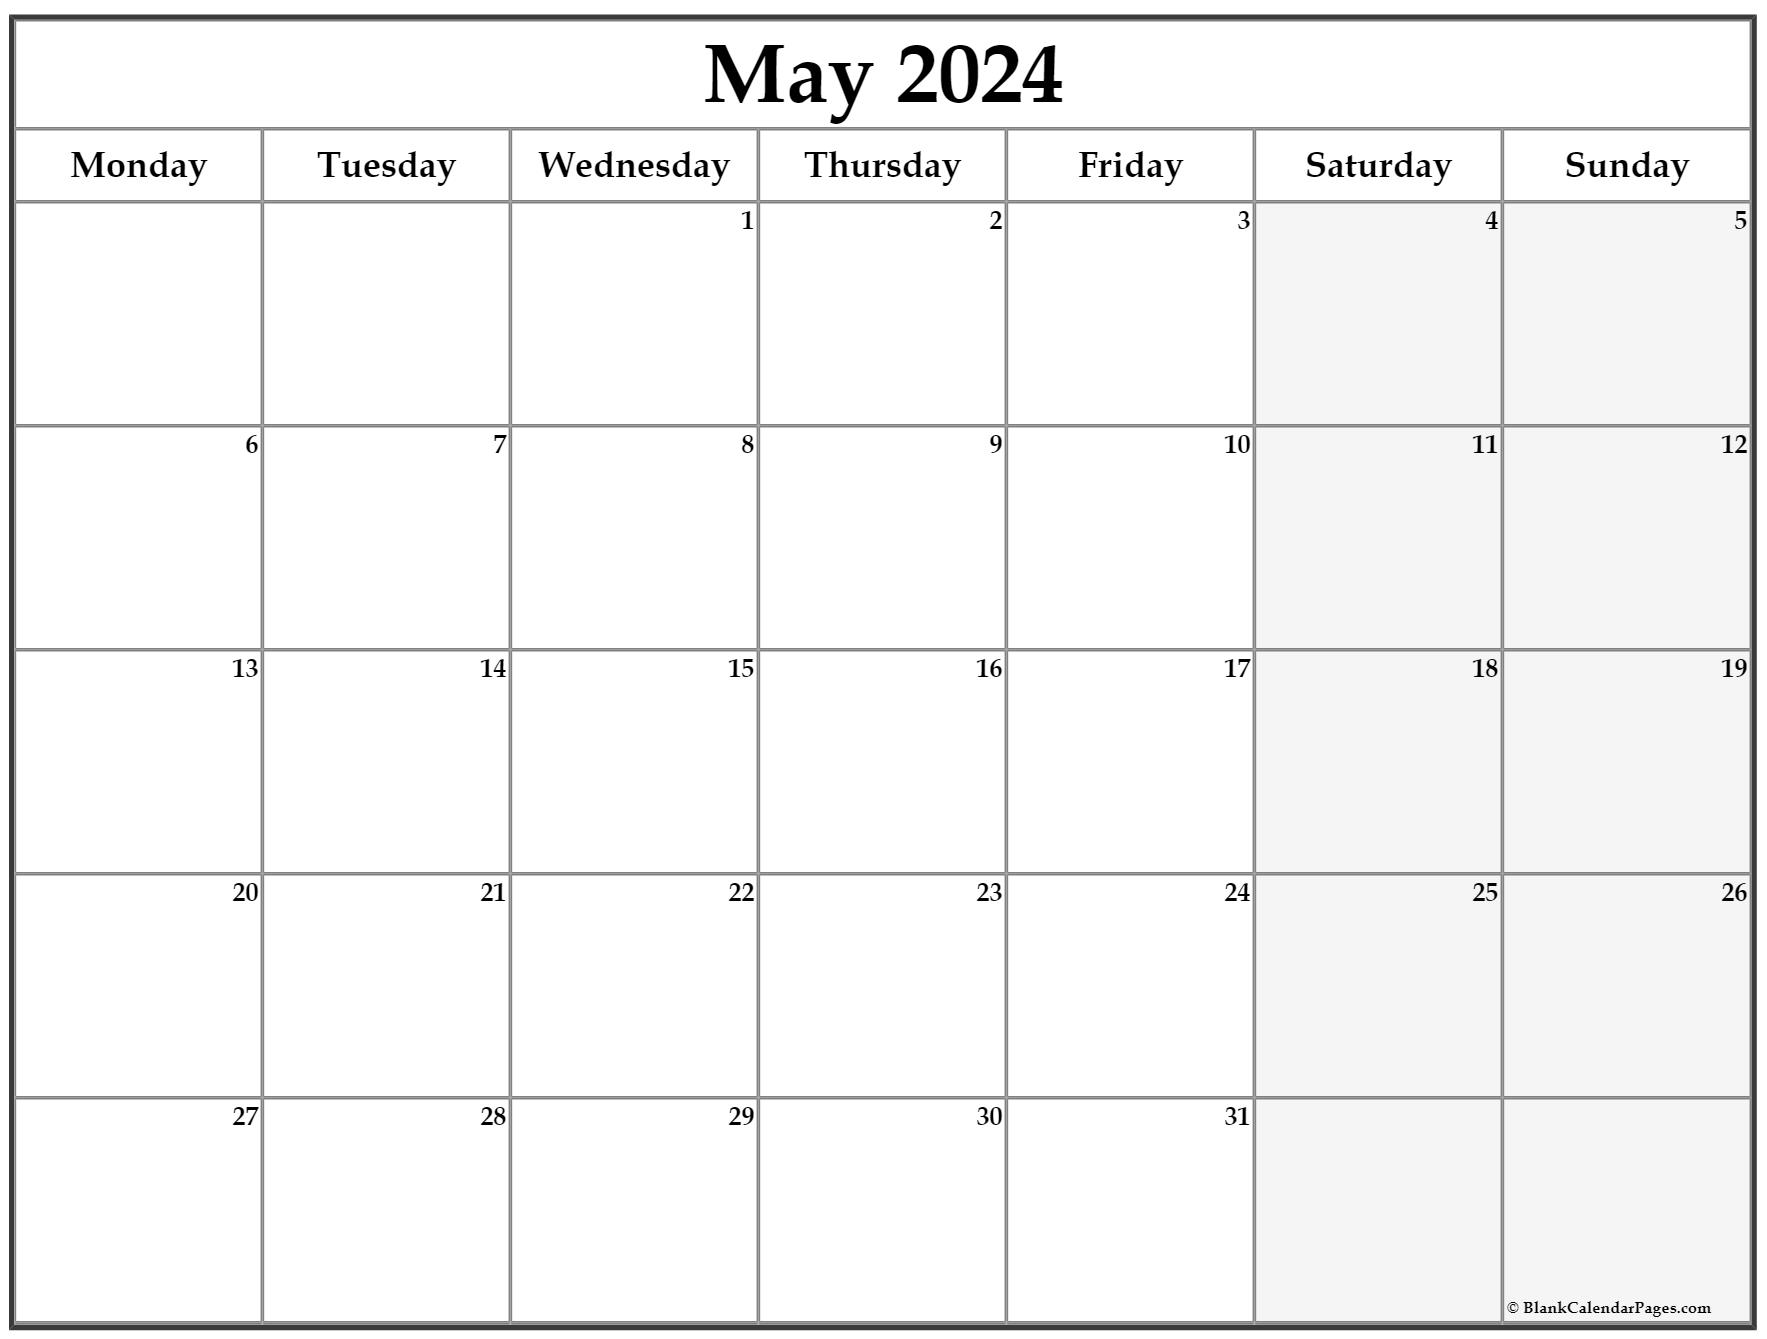 May 2024 Monday Calendar | Monday to Sunday